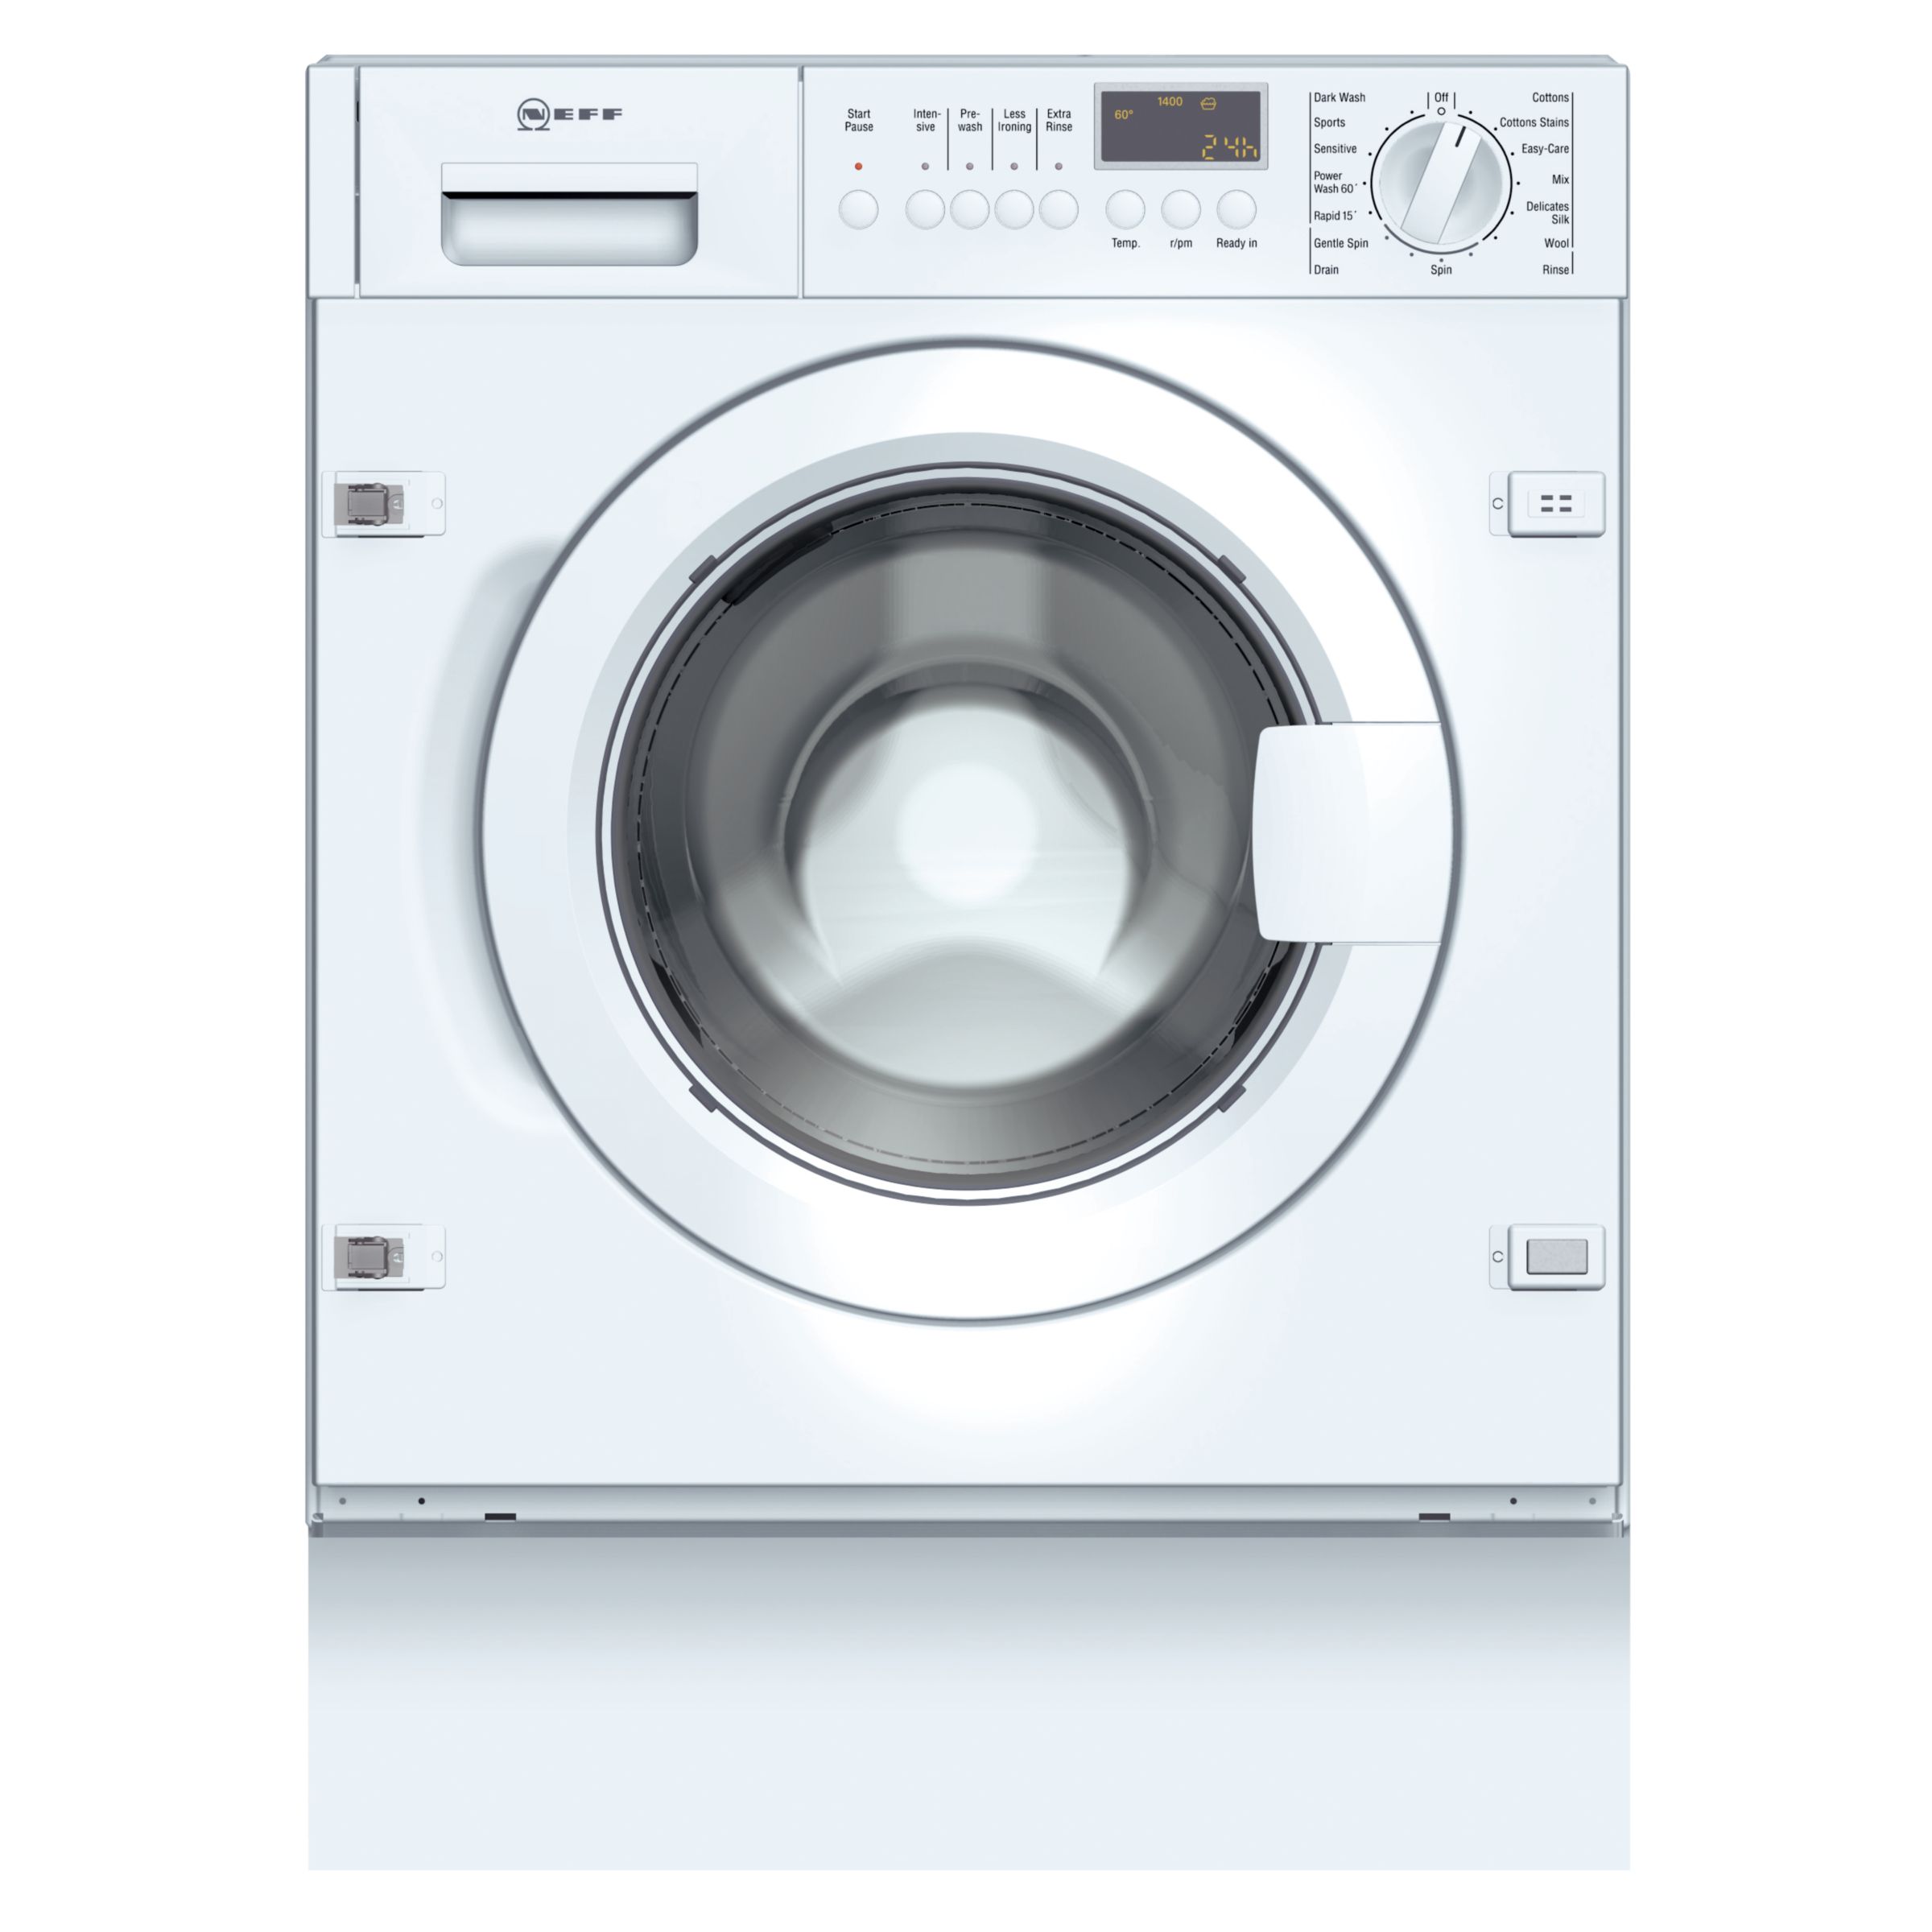 Neff W5440X0GB Integrated Washing Machine, White at John Lewis